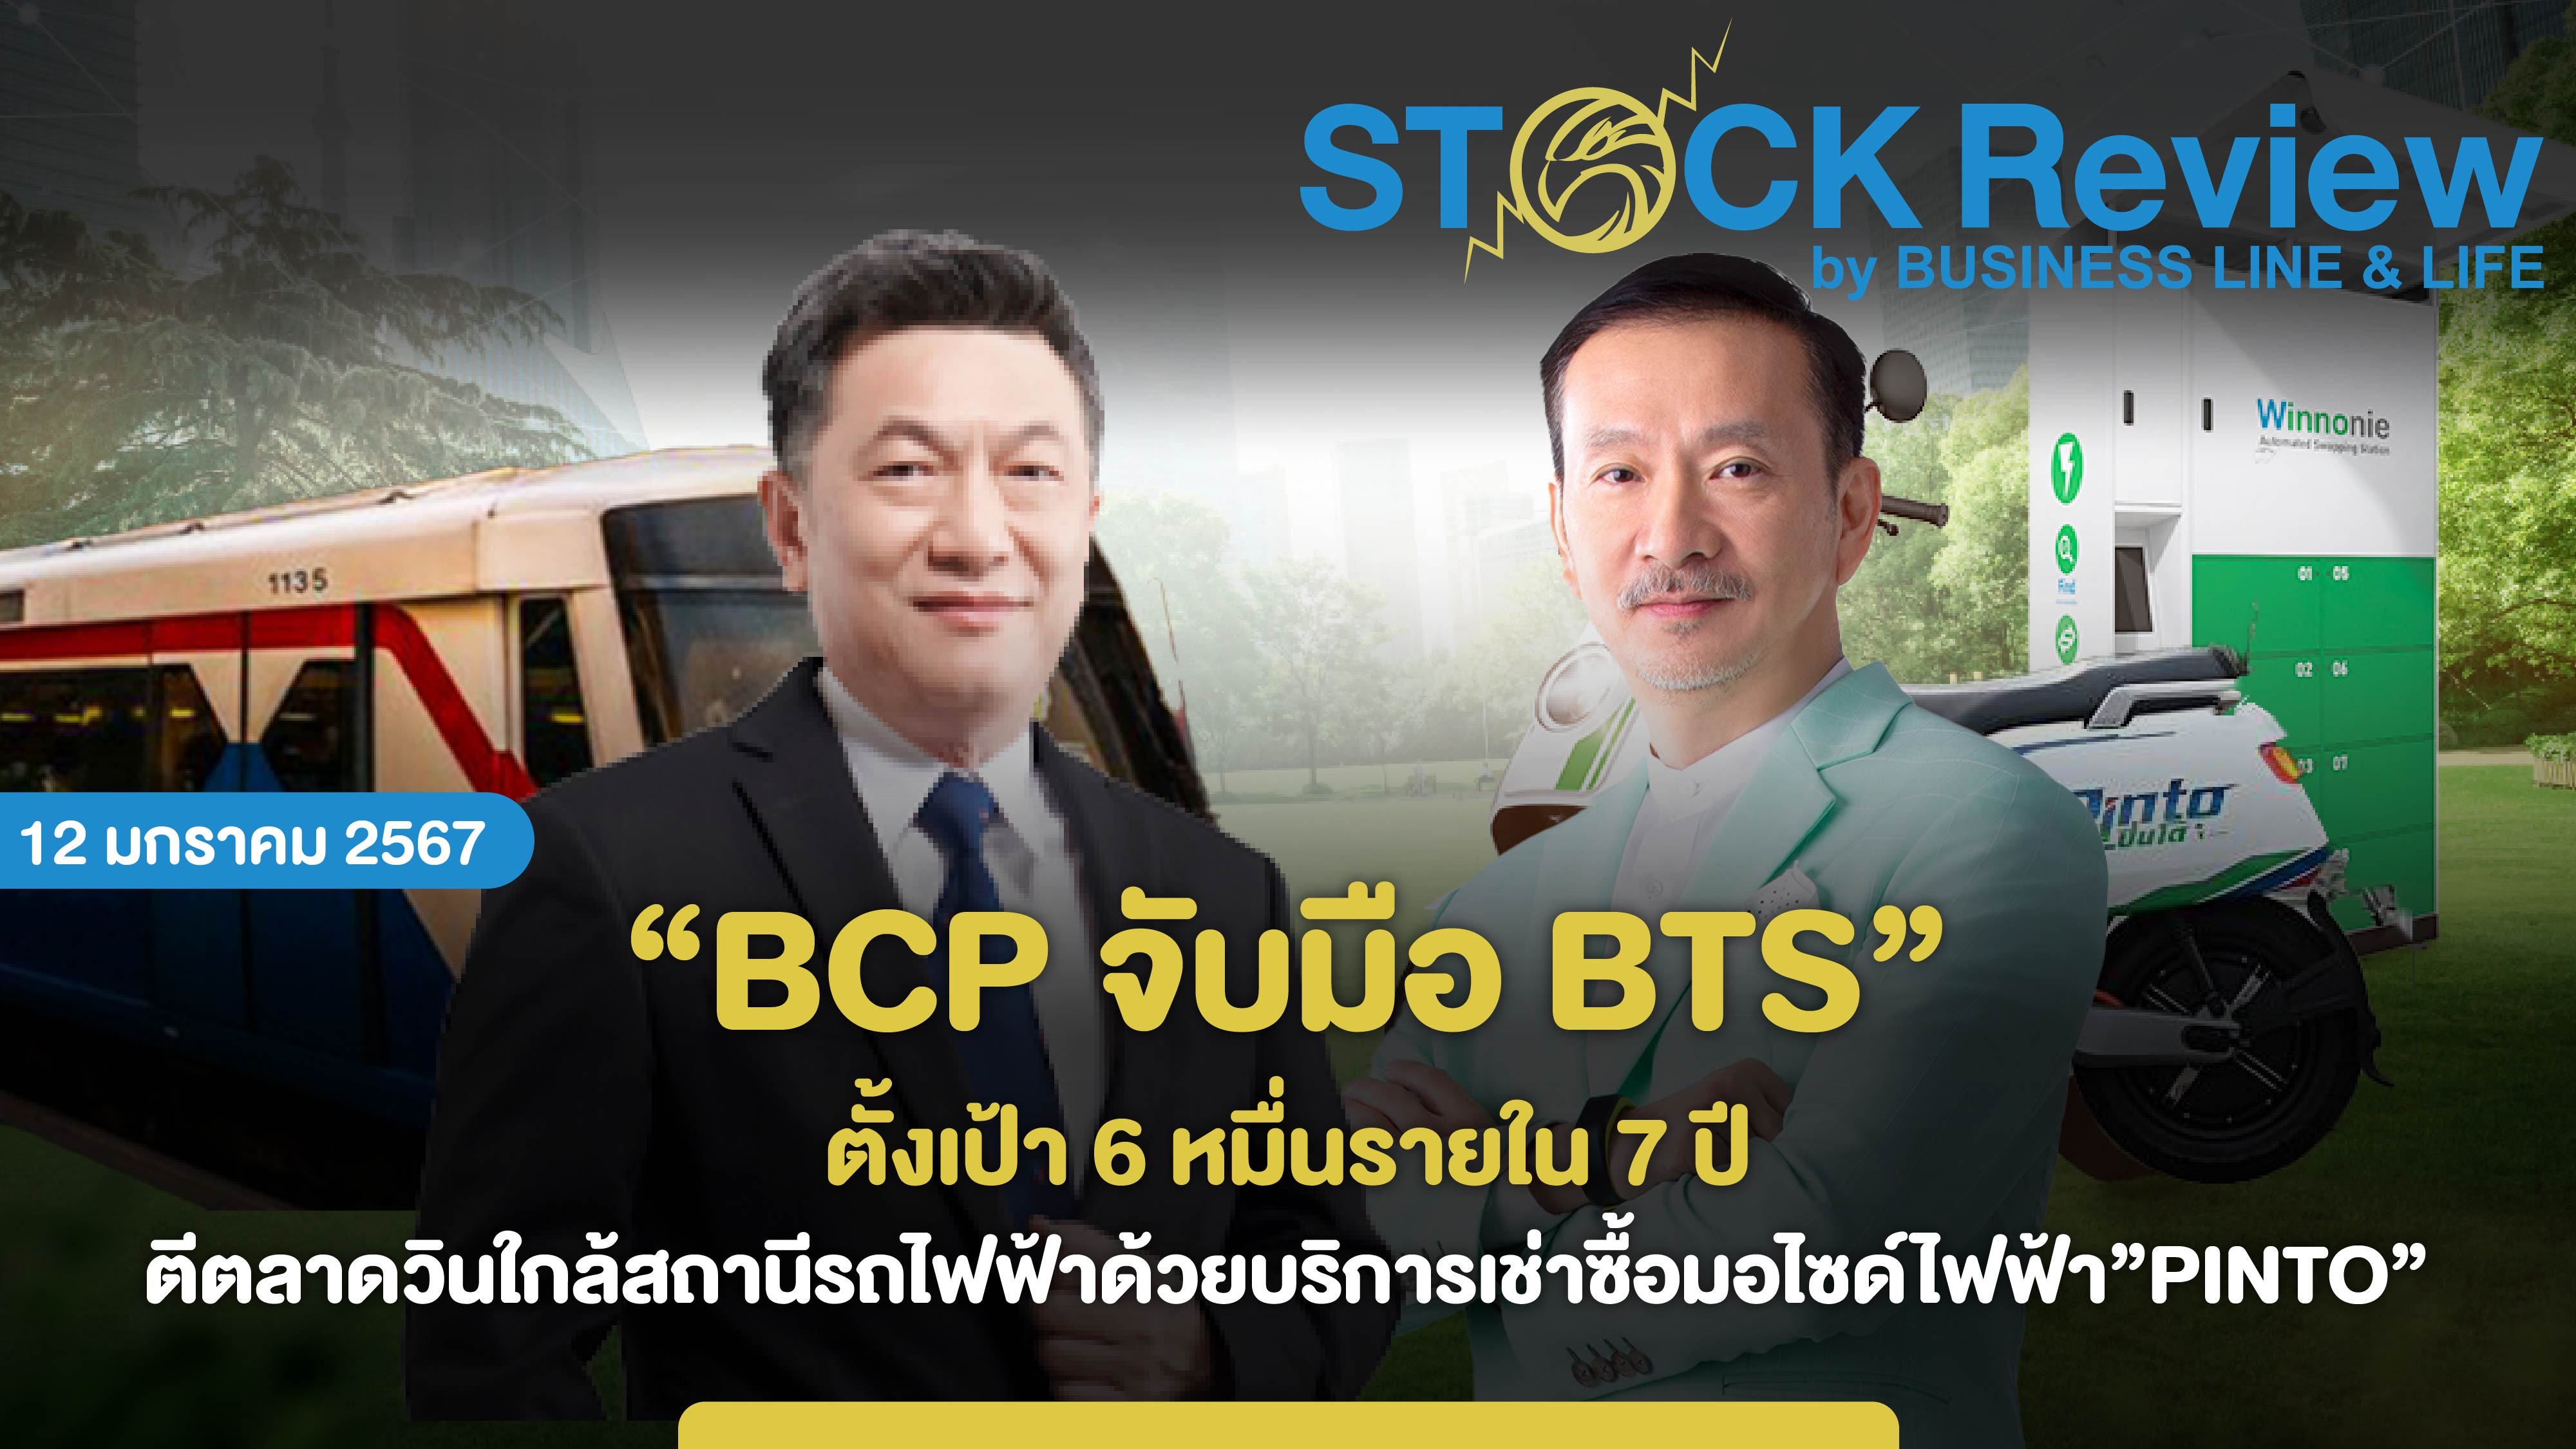 BCP จับมือ BTS ตั้งเป้าลูกค้า 6 หมื่นรายใน 7 ปี ตีตลาดวินใกล้สถานี